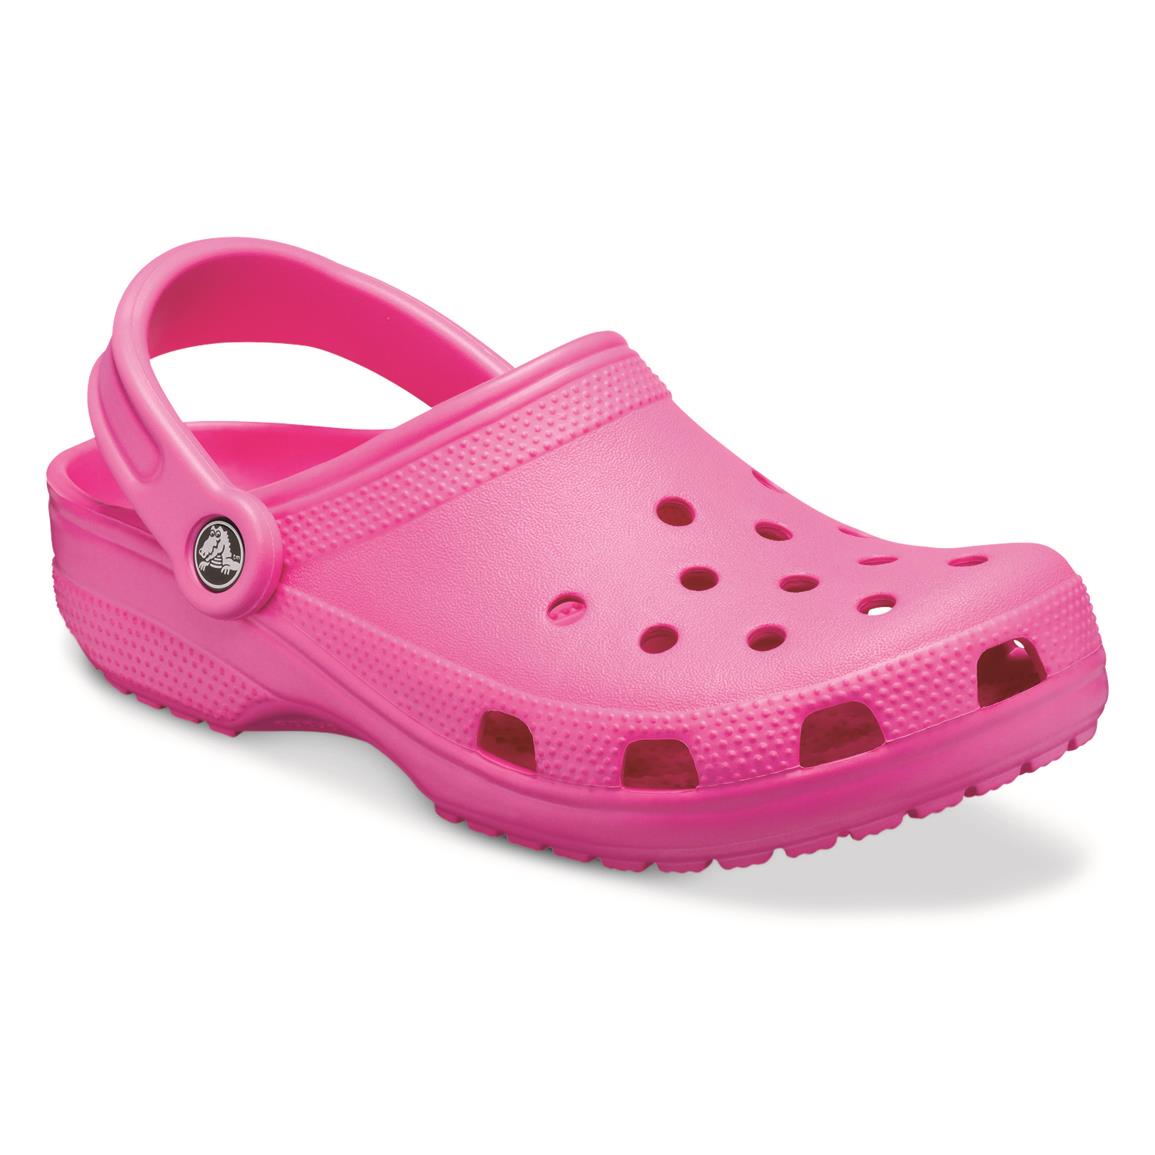 Crocs Women's Classic Clogs, Electric Pink